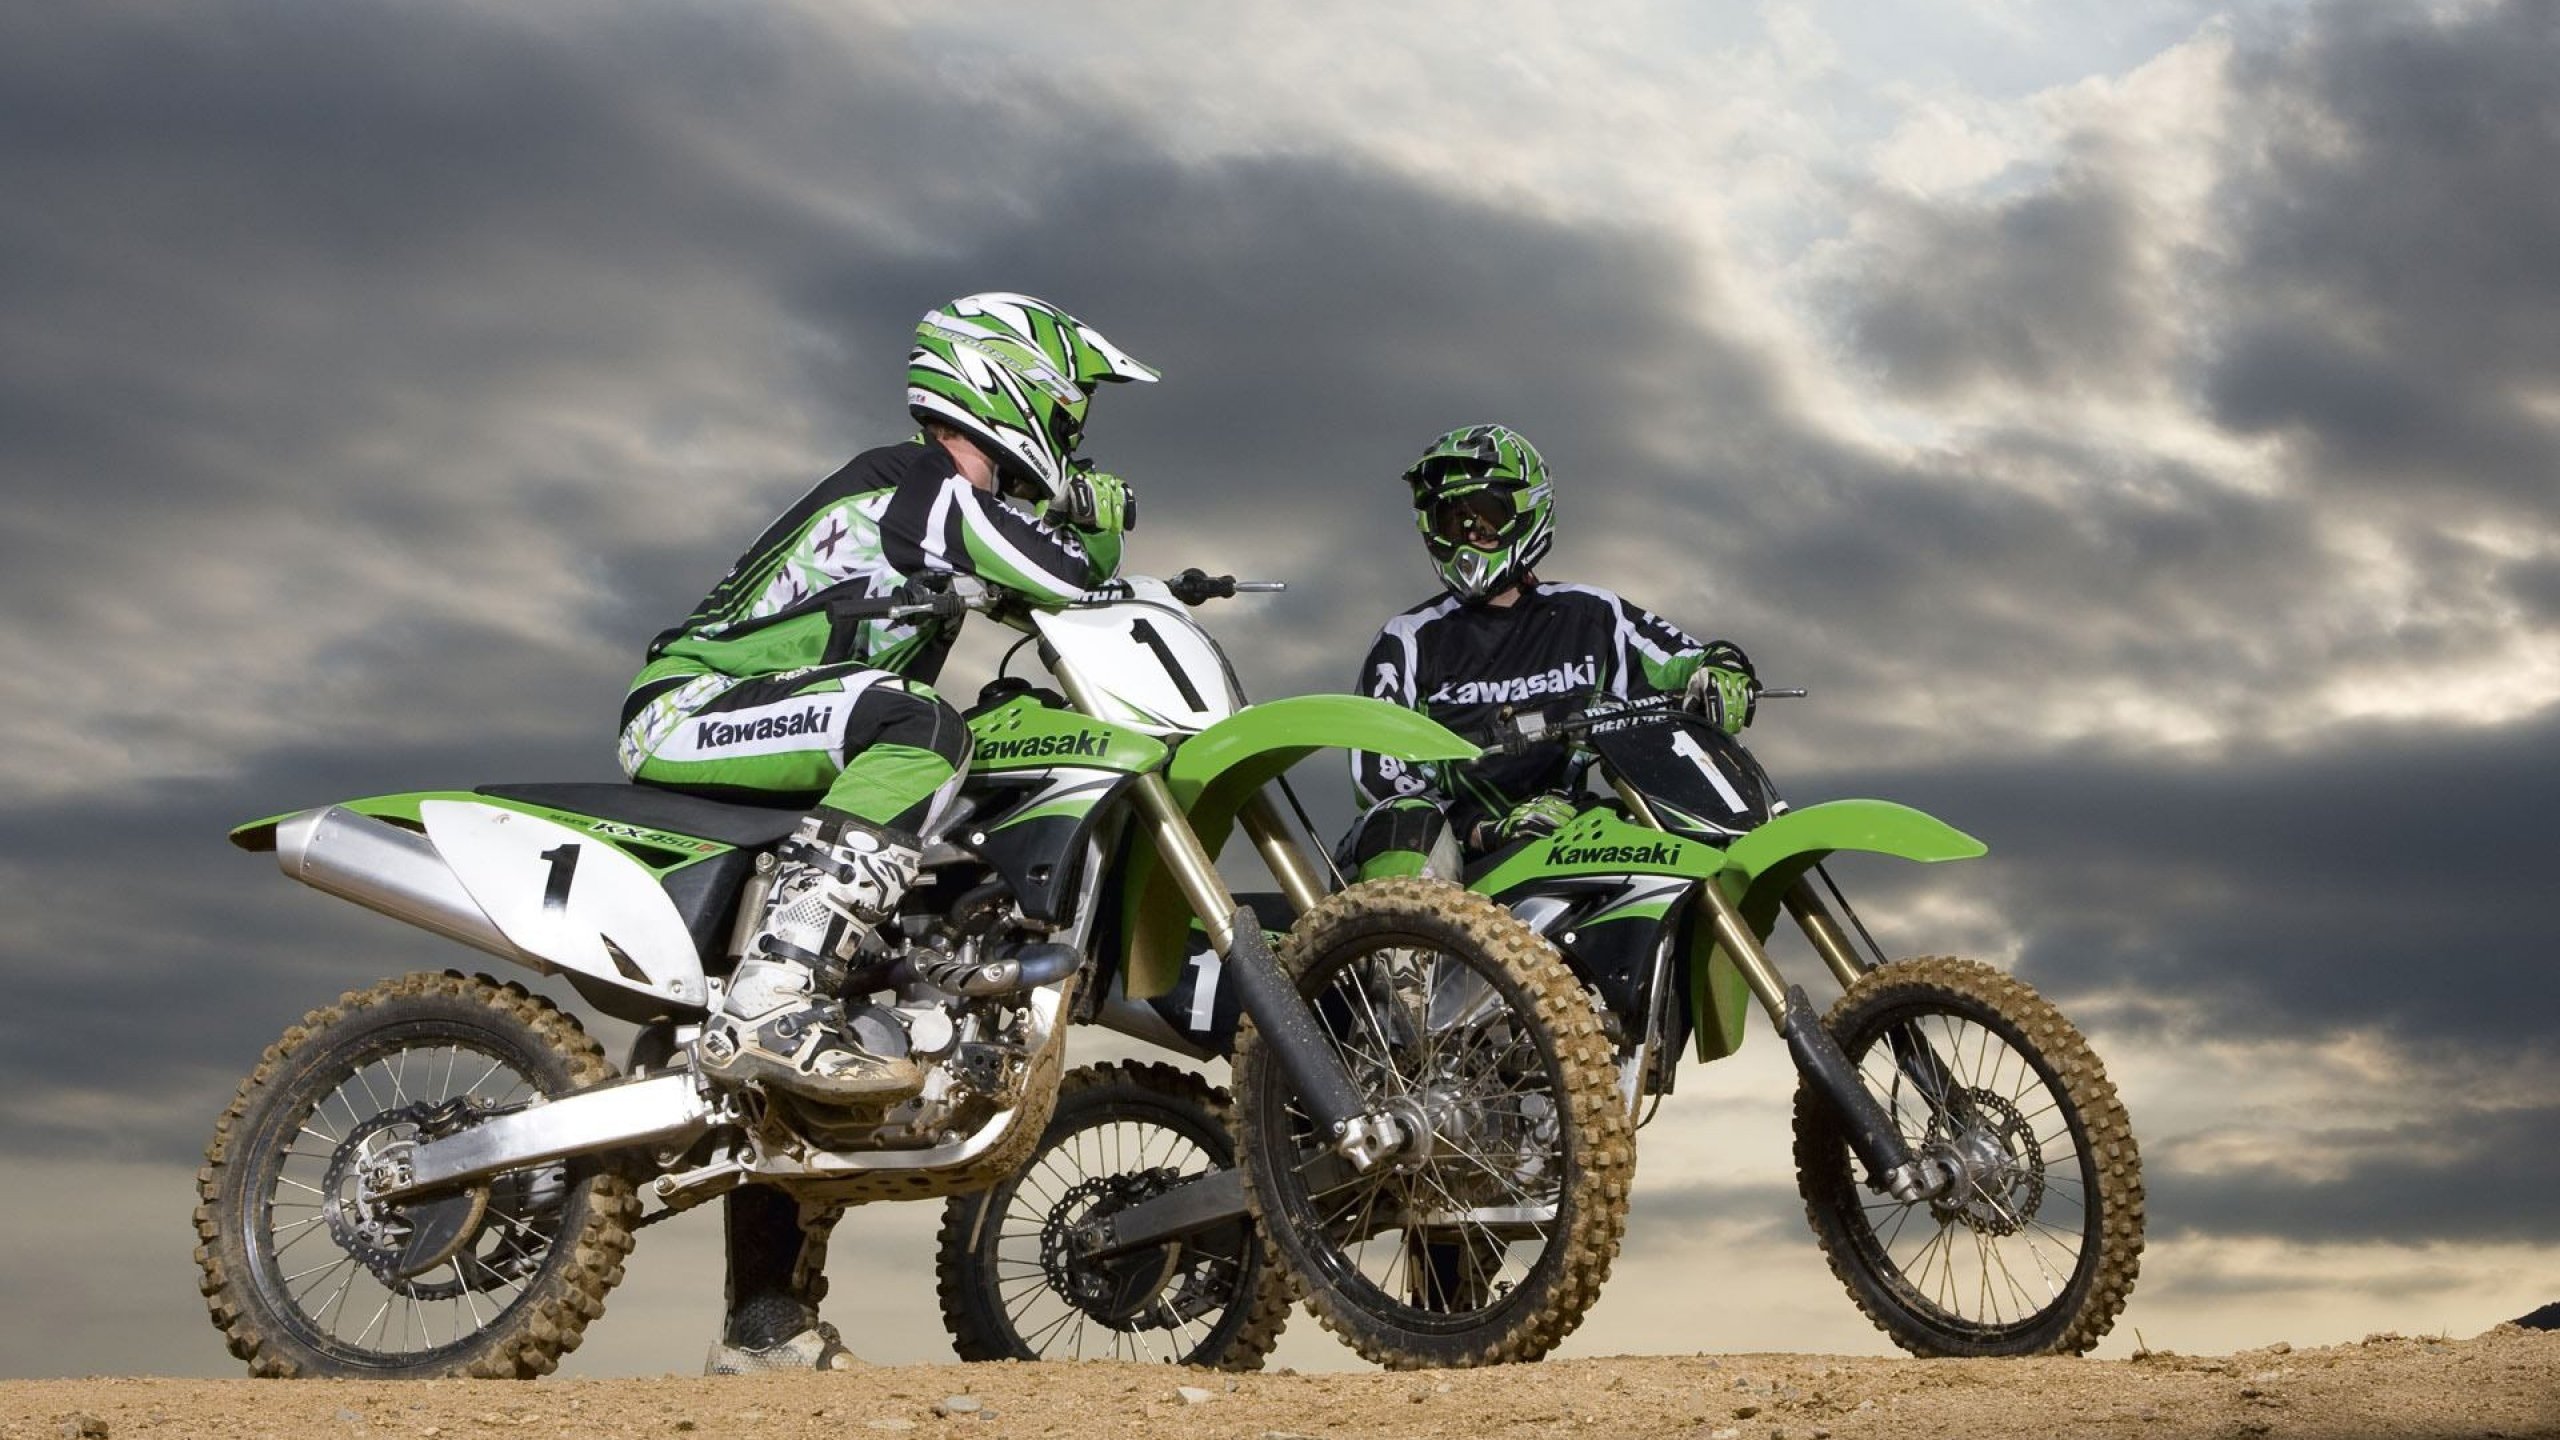 Download hd 2560x1440 Motocross (Dirt Bike) desktop background ID:378381 for free